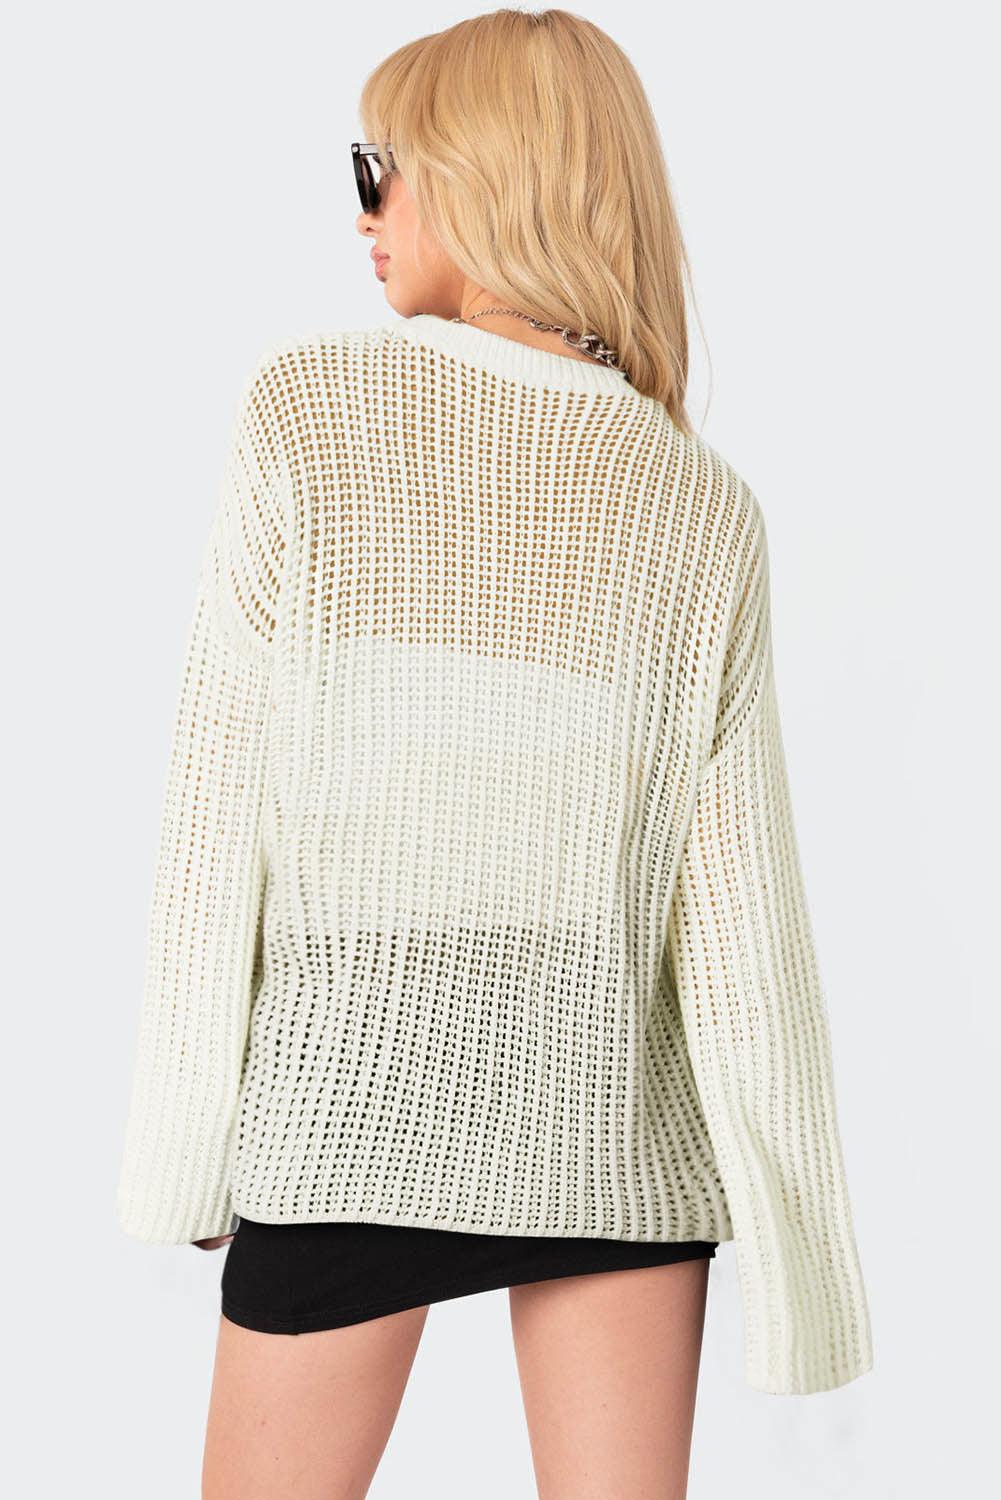 White Seeing Stars Oversized Sweater - L & M Kee, LLC